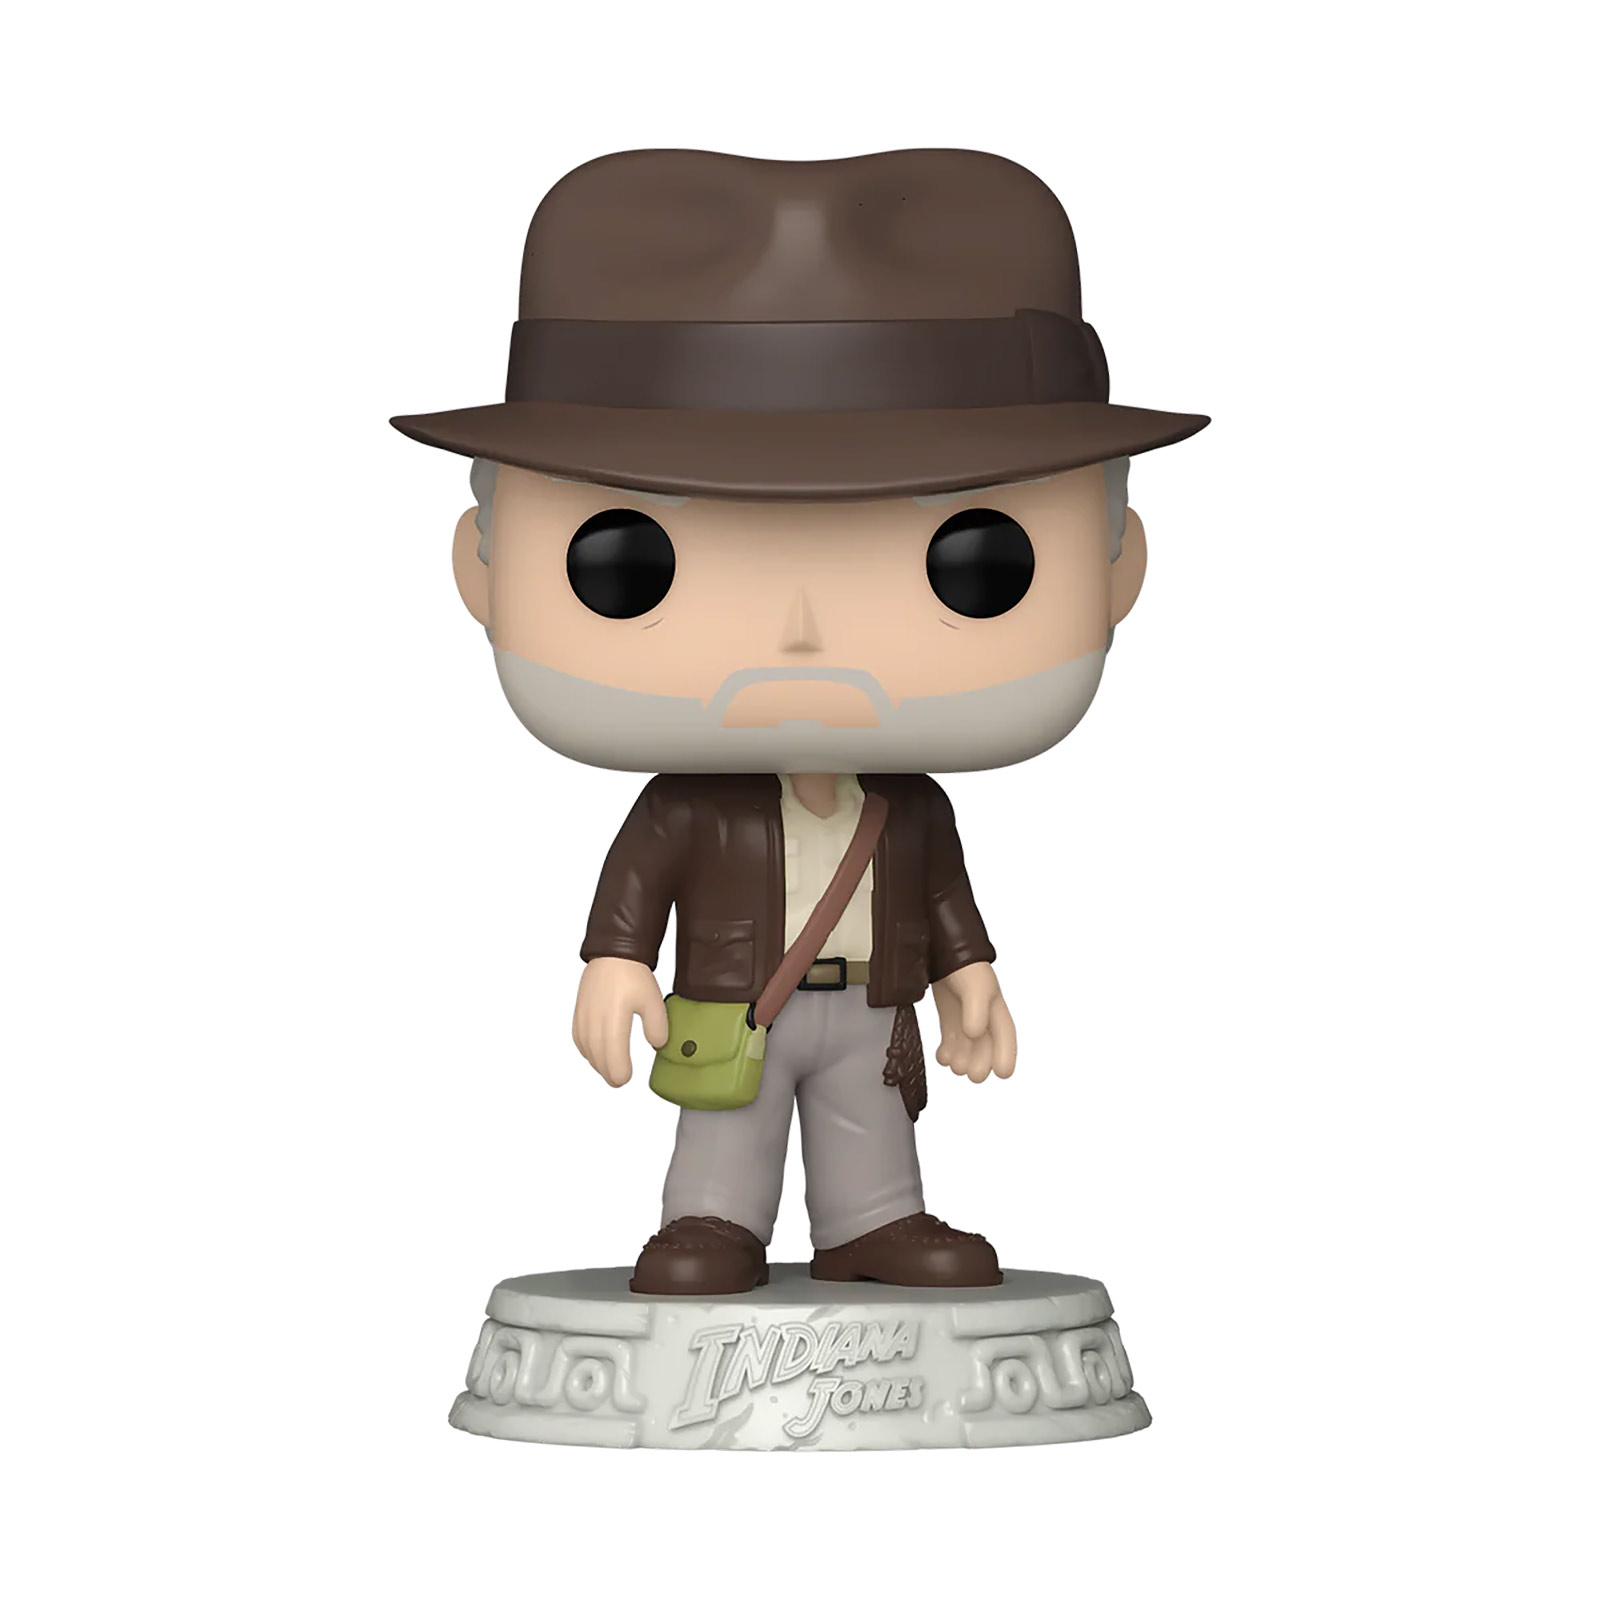 Indiana Jones - Figurine à tête branlante Indiana Jones Funko Pop